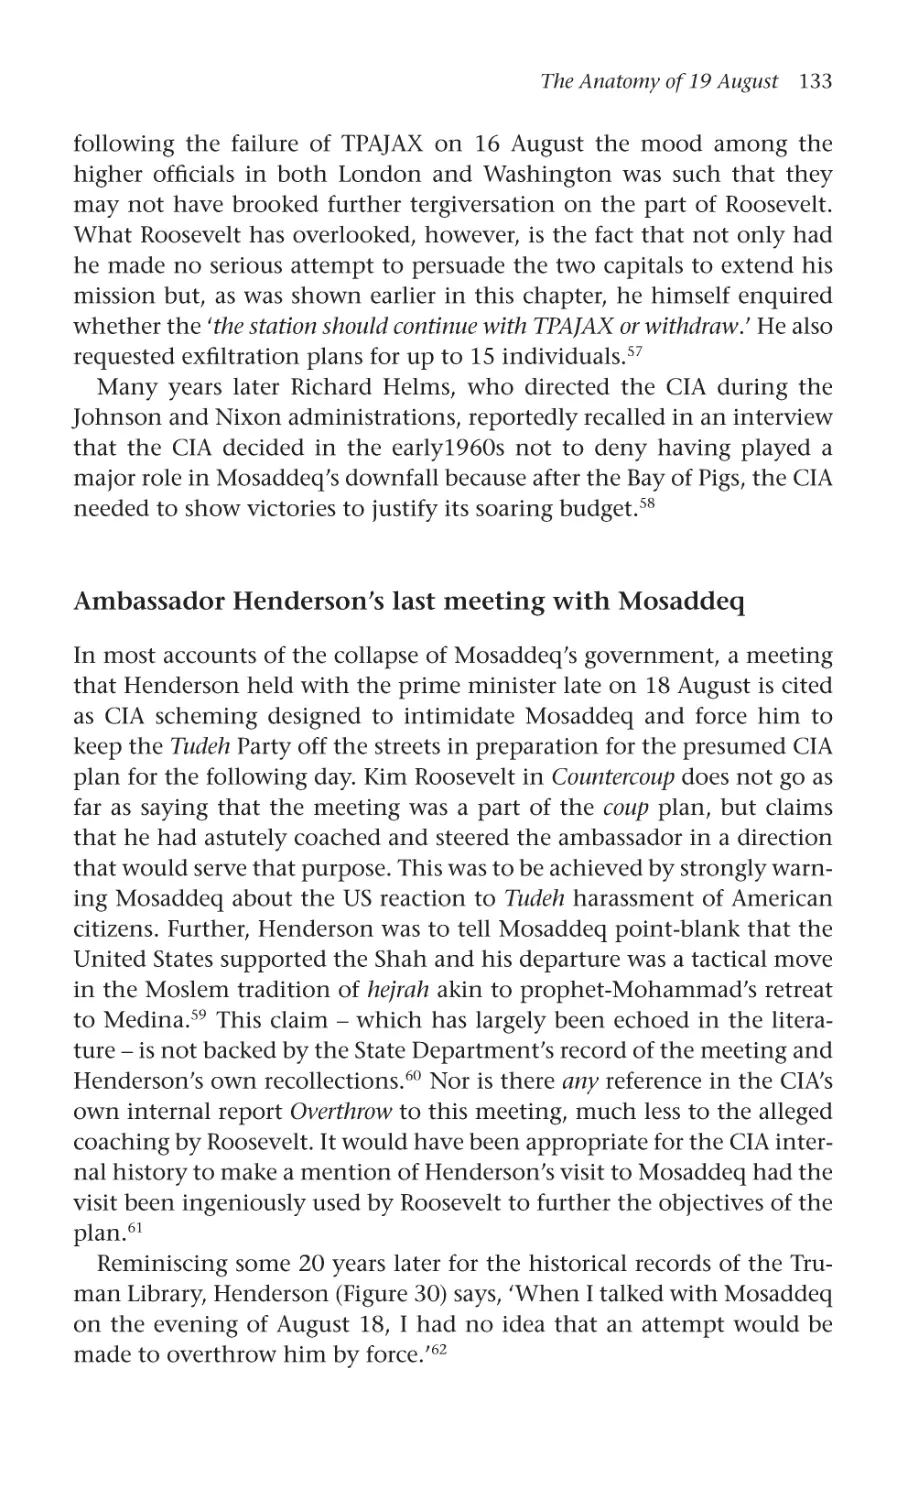 Ambassador Henderson's last meeting with Mosaddeq